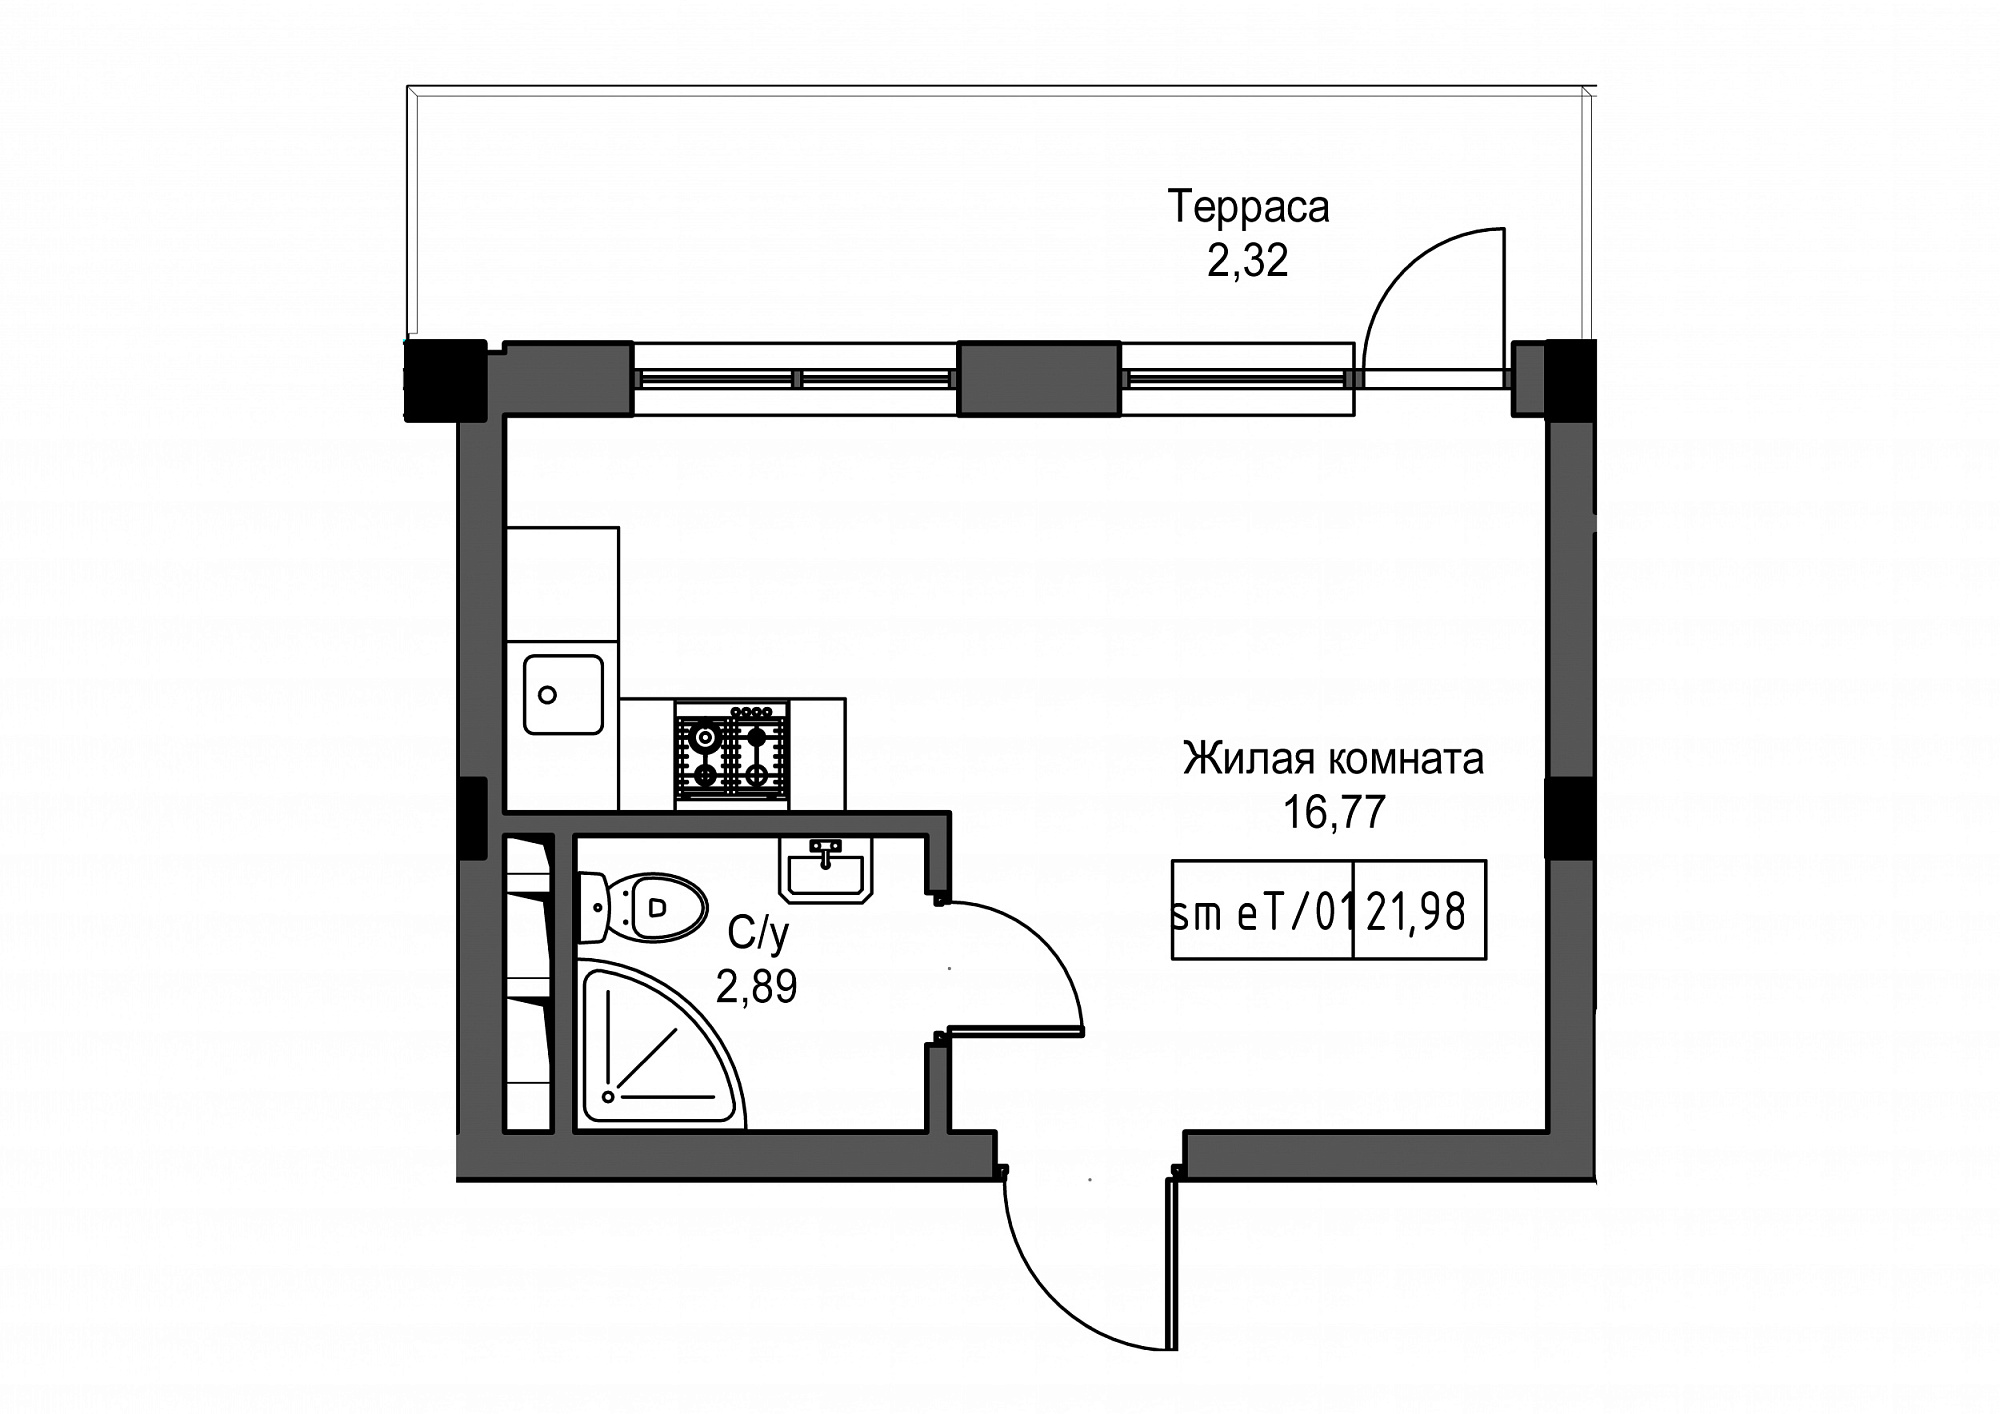 Planning Smart flats area 21.98m2, UM-002-02/0102.